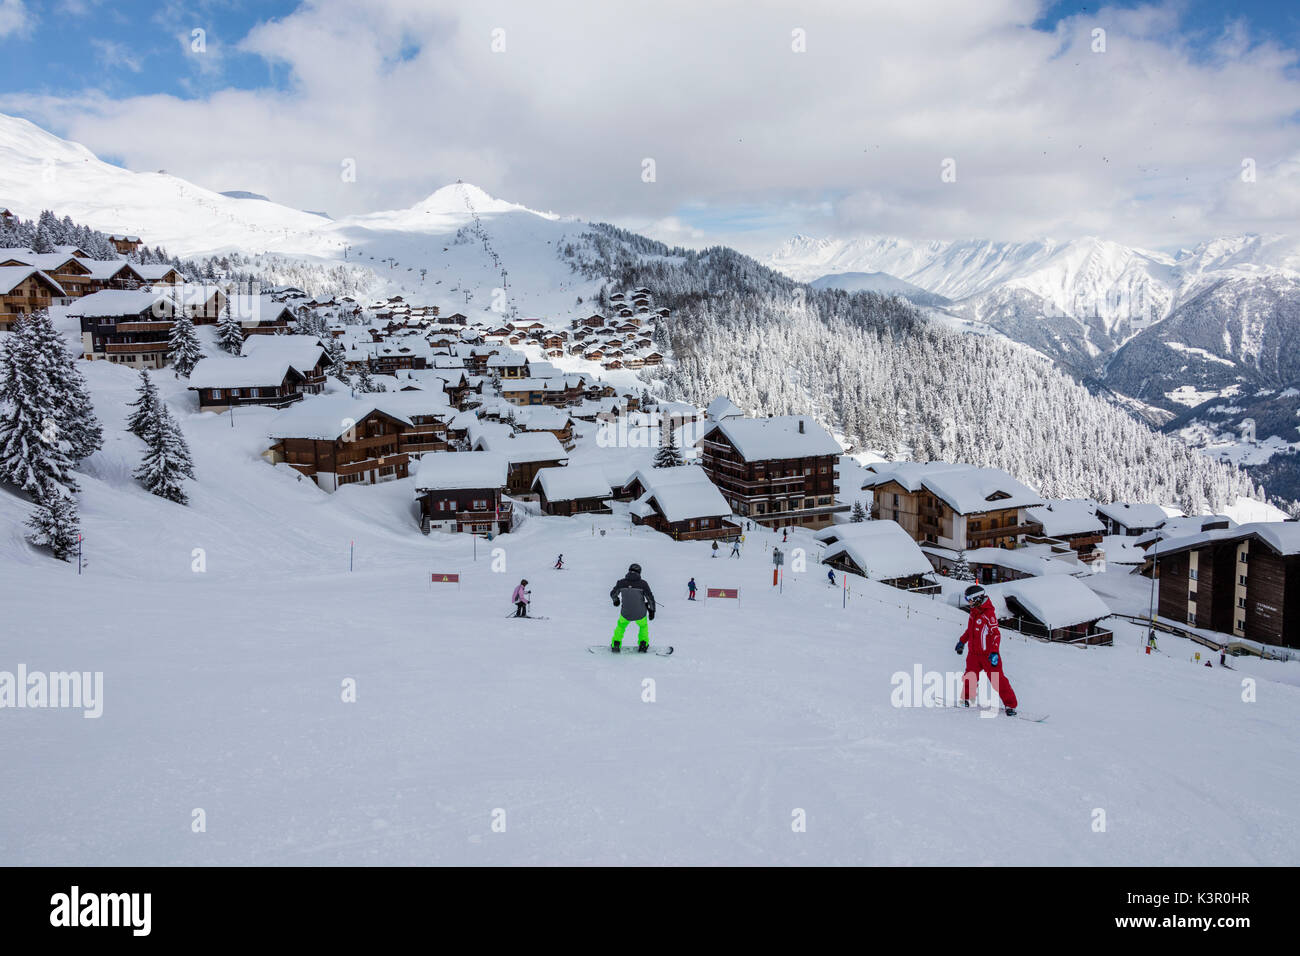 Snowboarders on ski slopes frames the typical alpine village Bettmeralp district of Raron canton of Valais Switzerland Europe Stock Photo